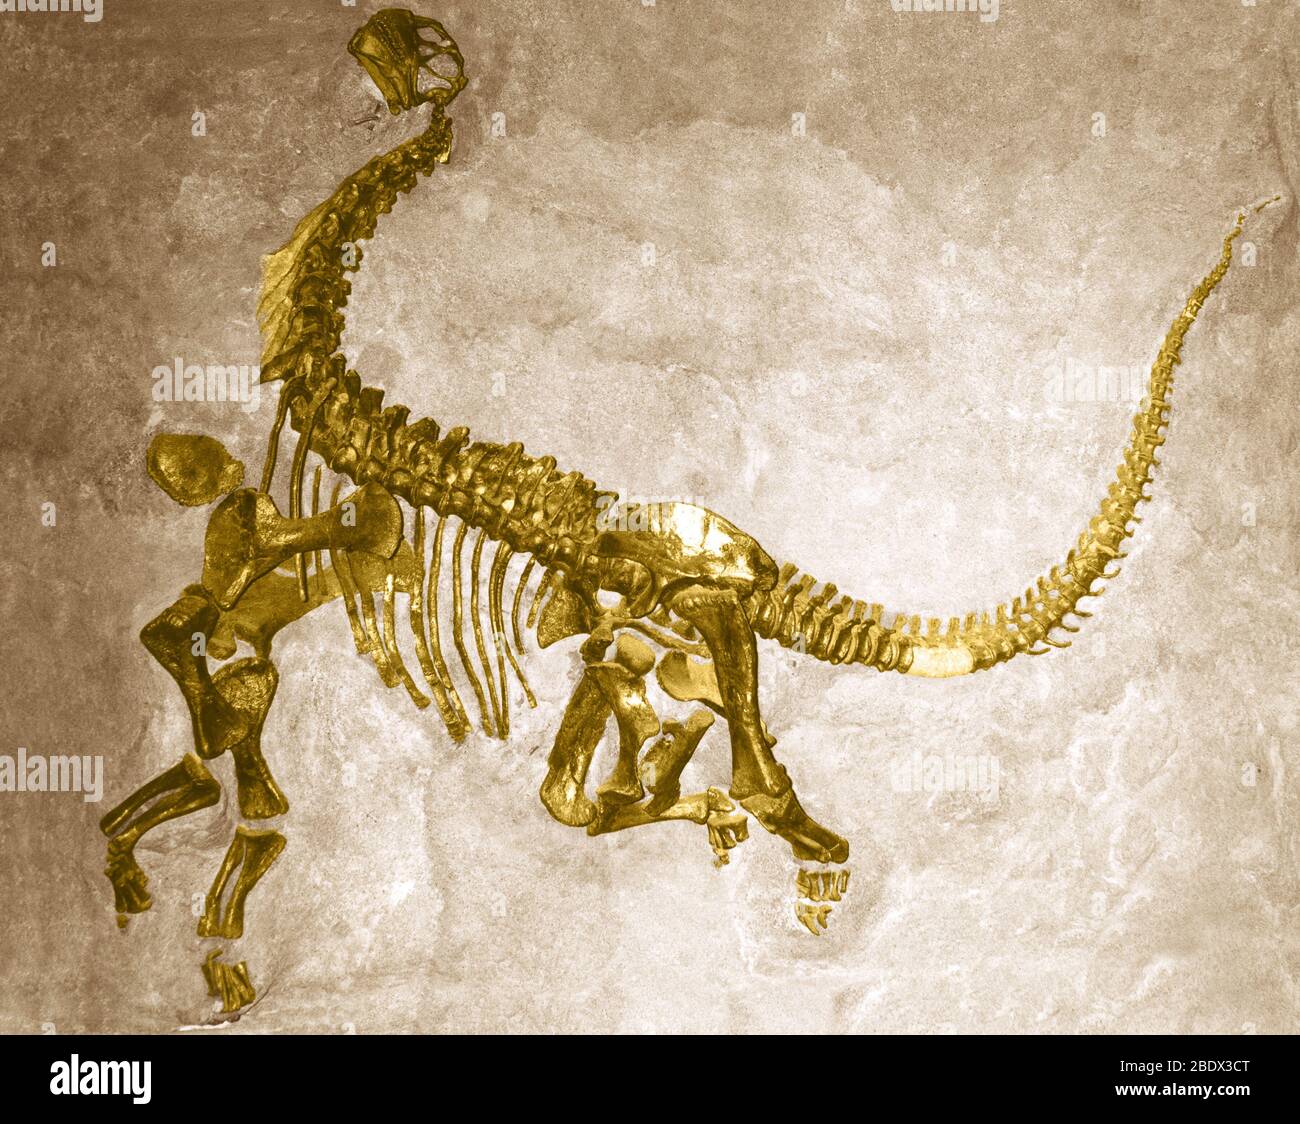 Junges Dinosaurier-Skelett Stockfoto